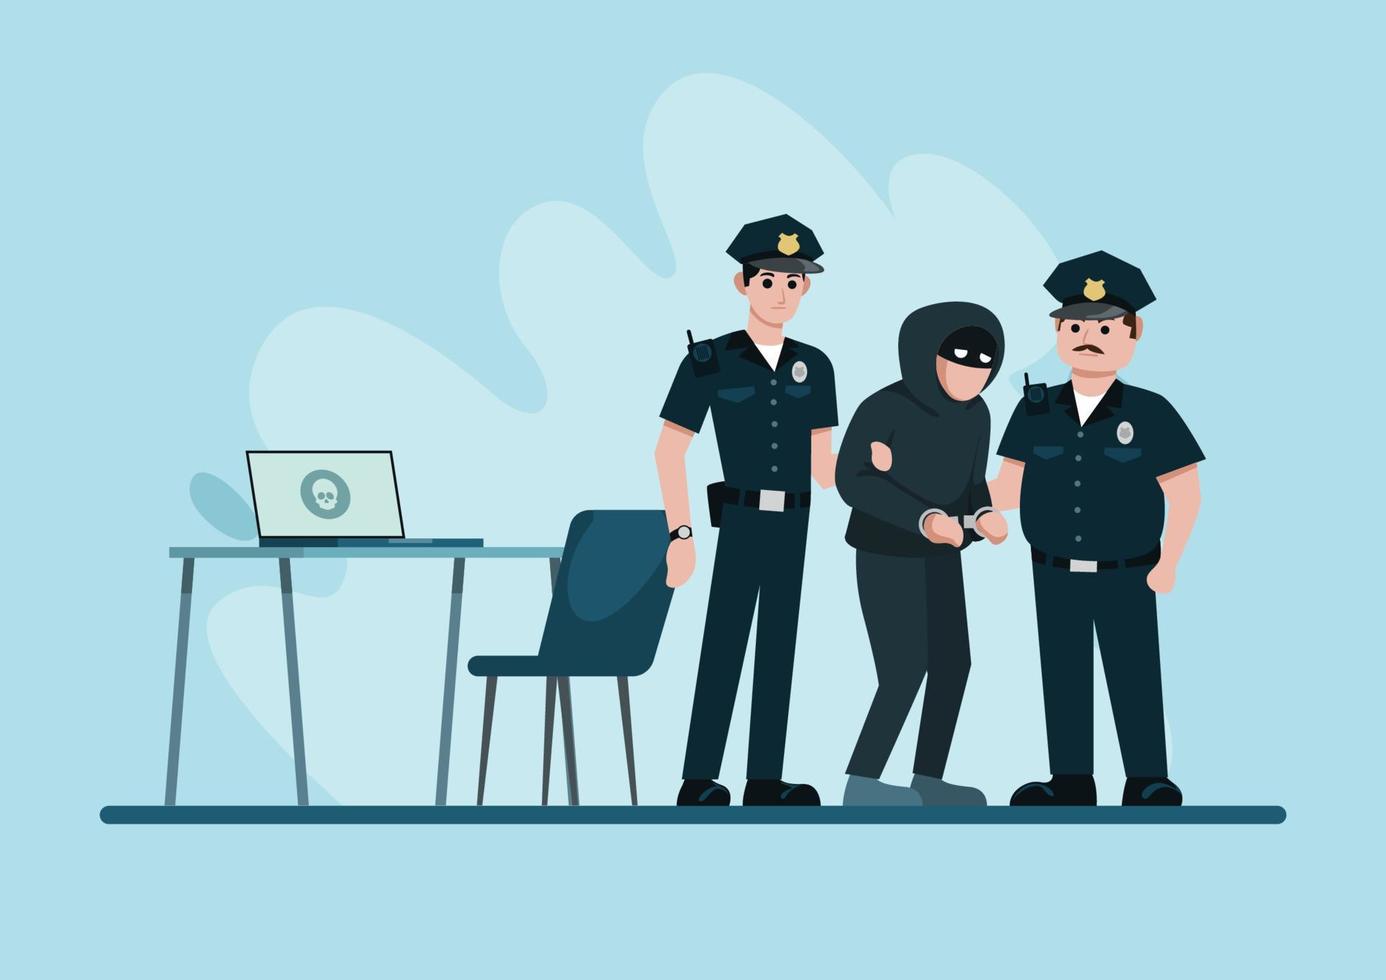 Police officers arresting hacker, vector illustration